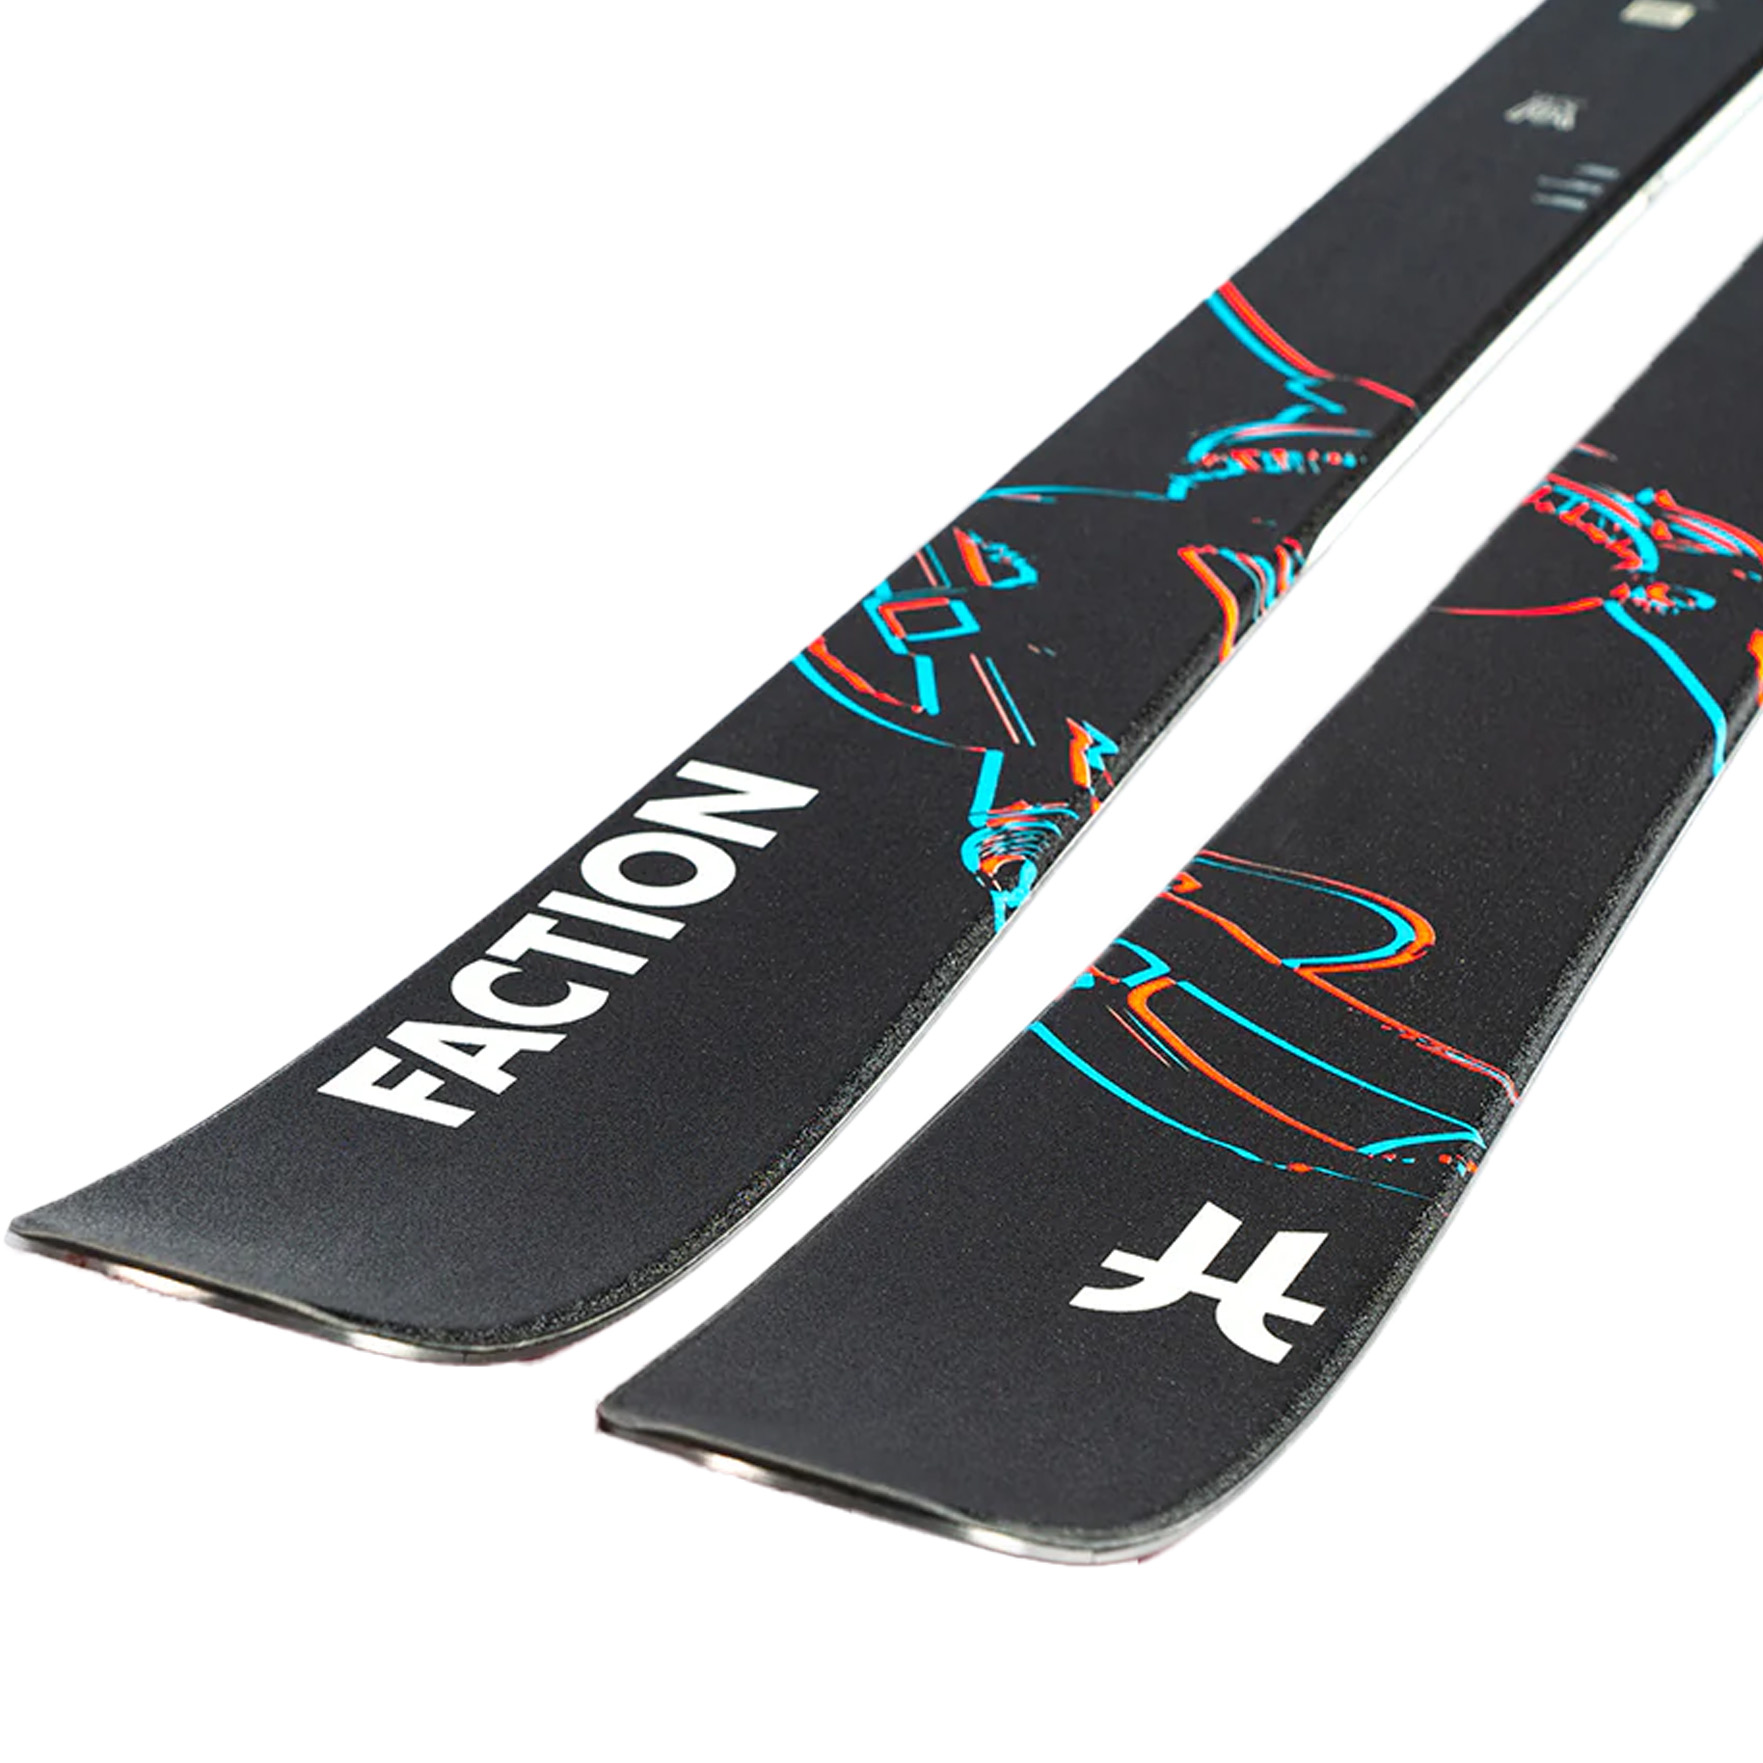 Faction Prodigy 0 Skis